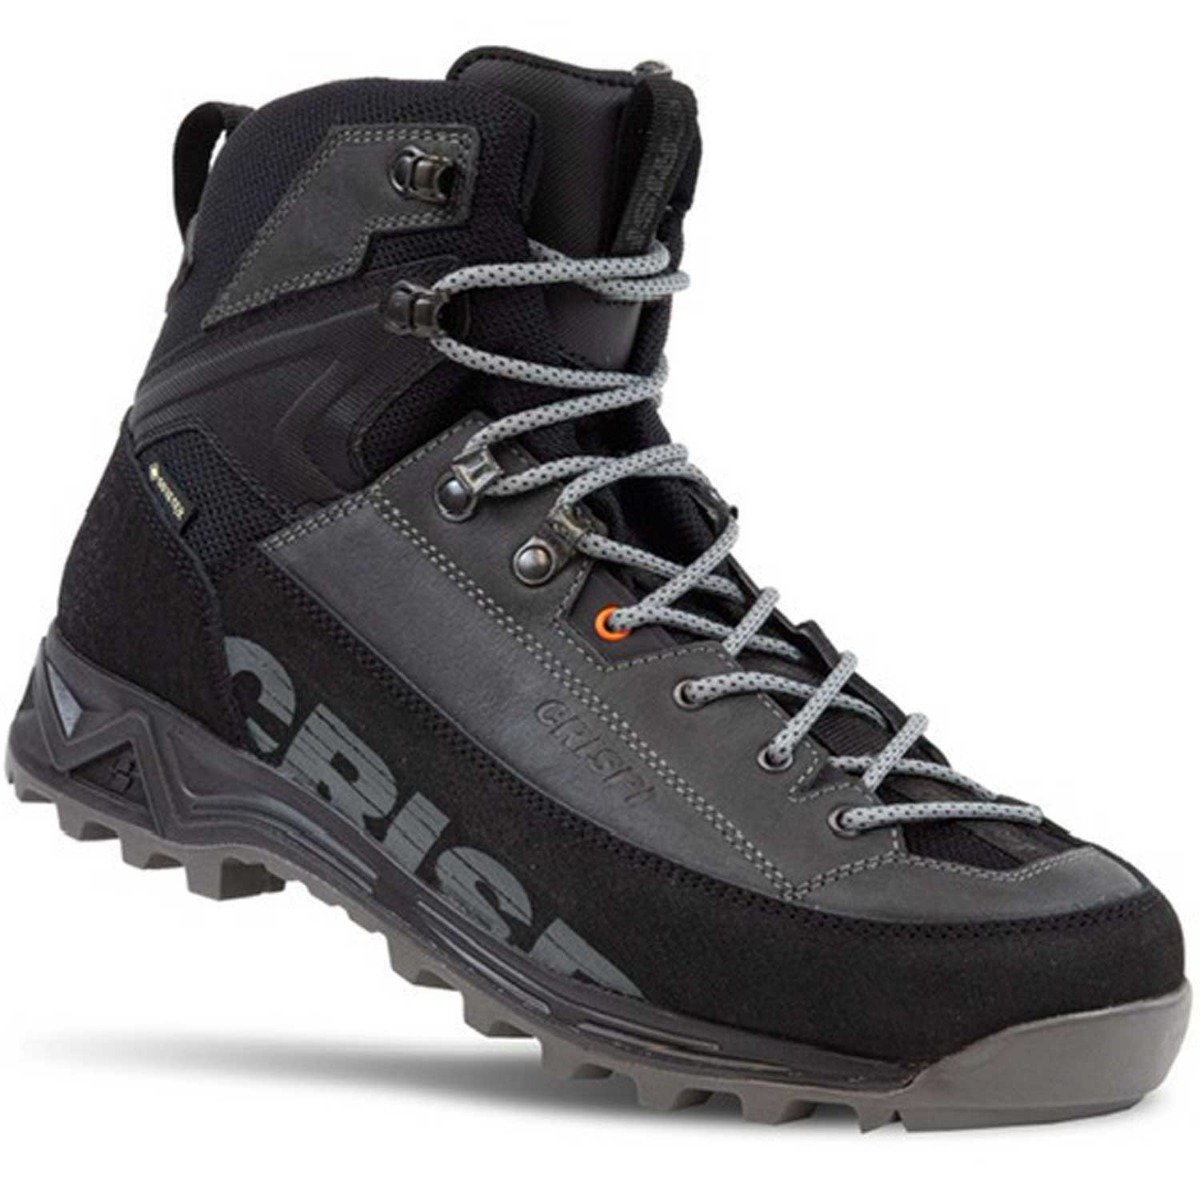 Crispi Women's Altitude GTX Non-Insulated Hunting Boots